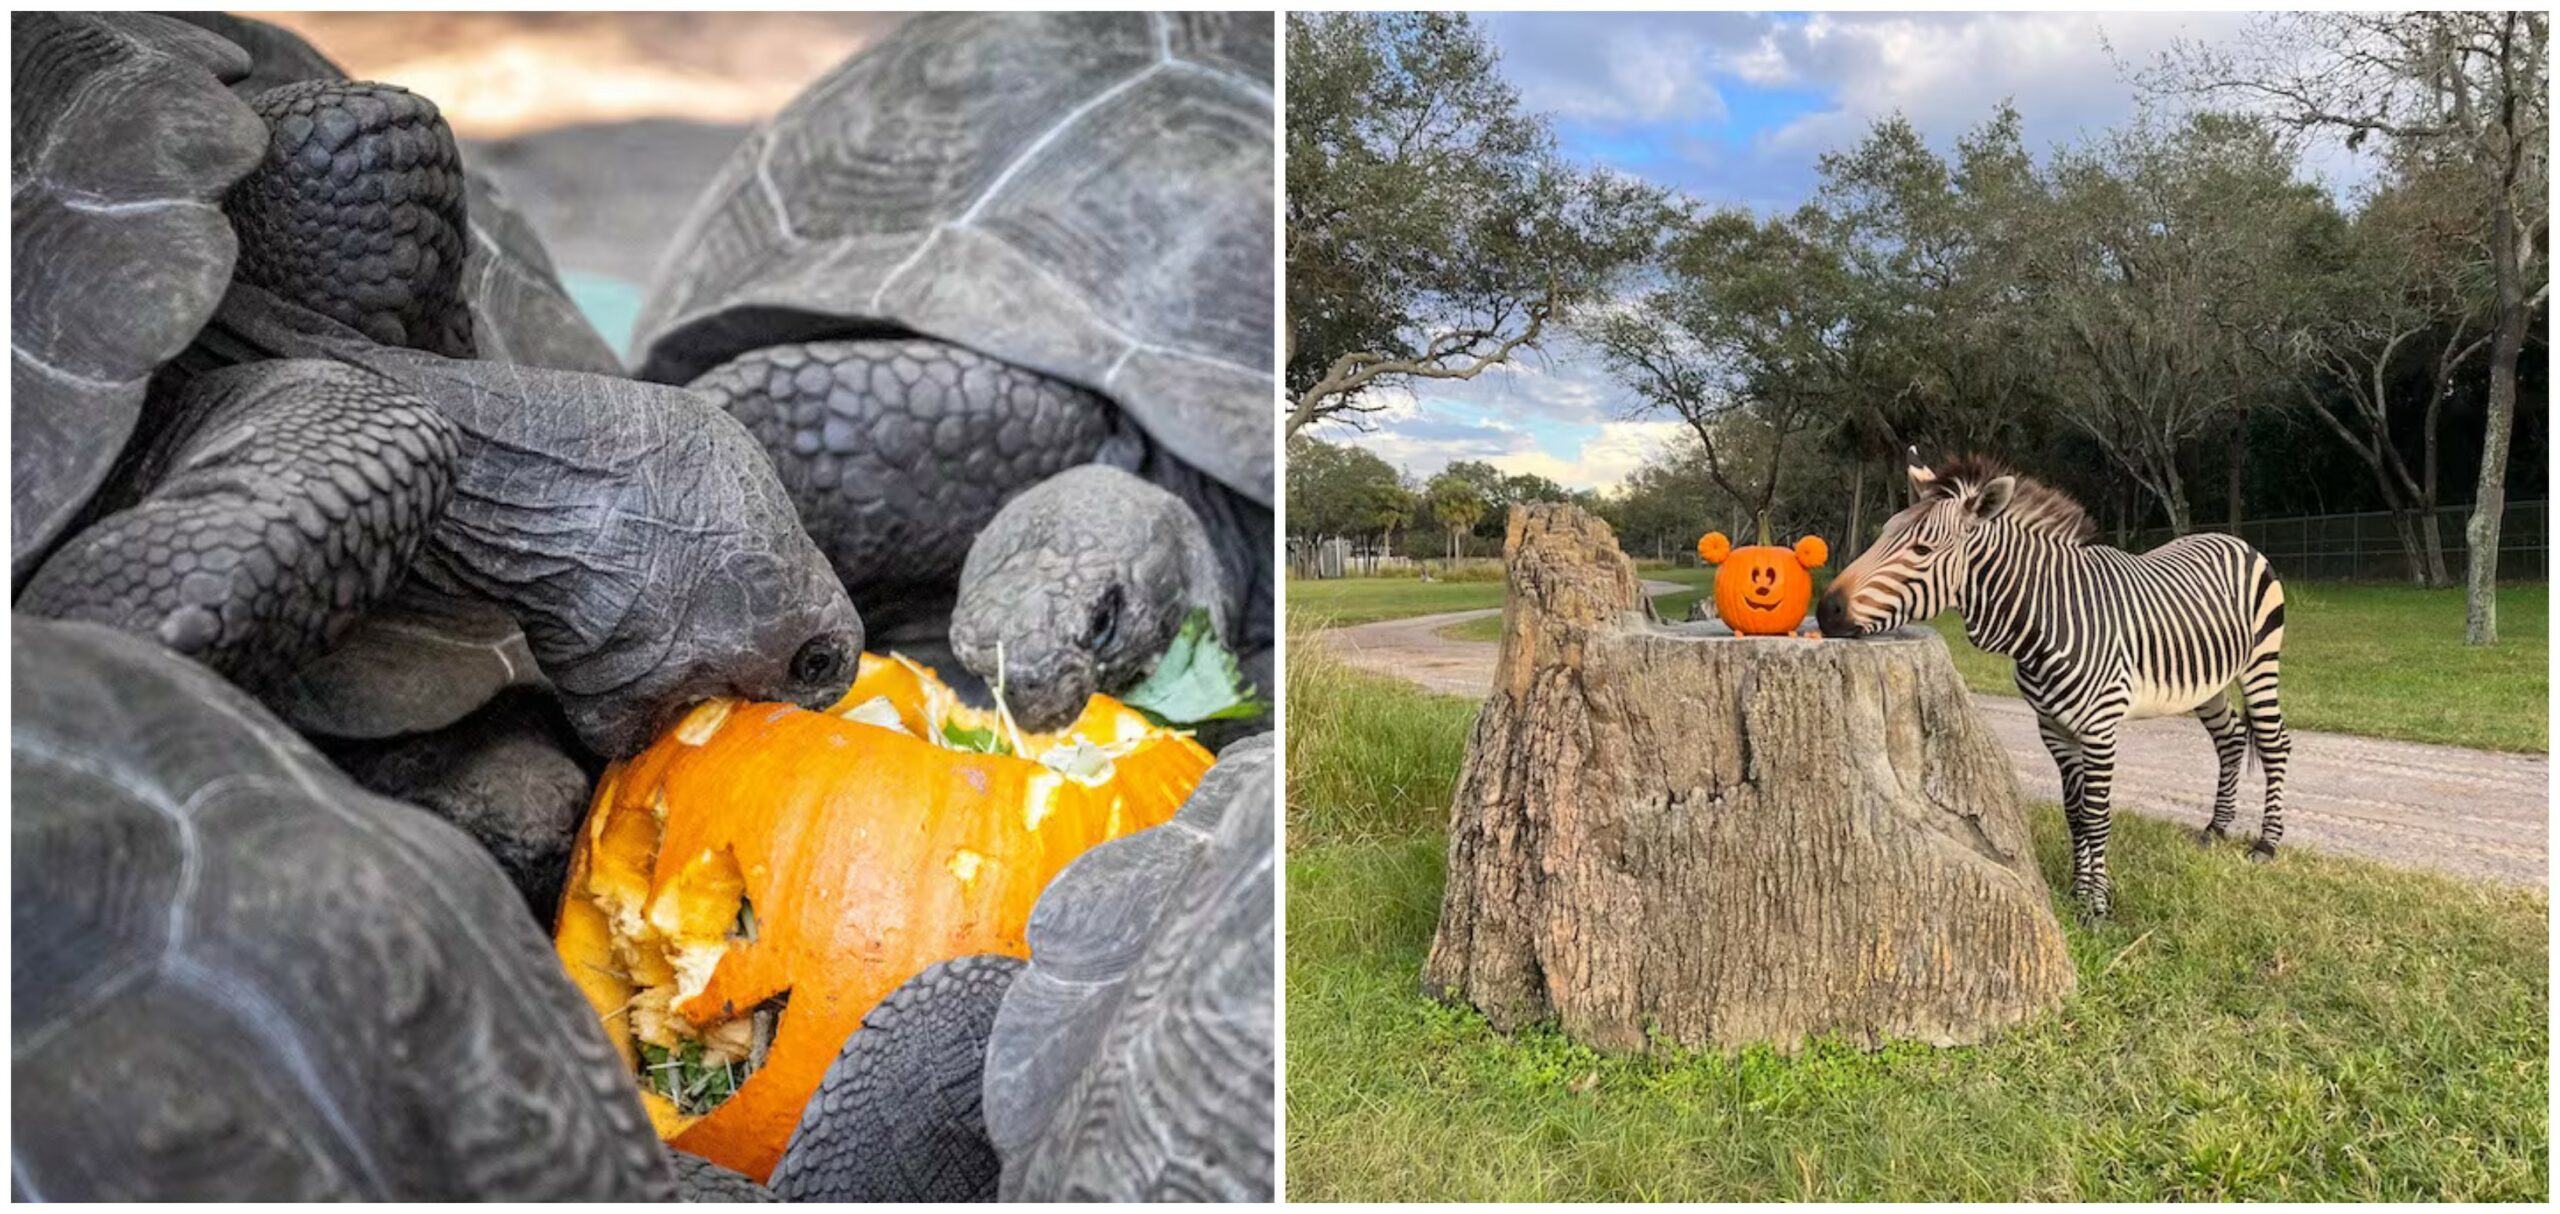 Animals and Caretakers Celebrate Pumpkin Day at Disney’s Animal Kingdom